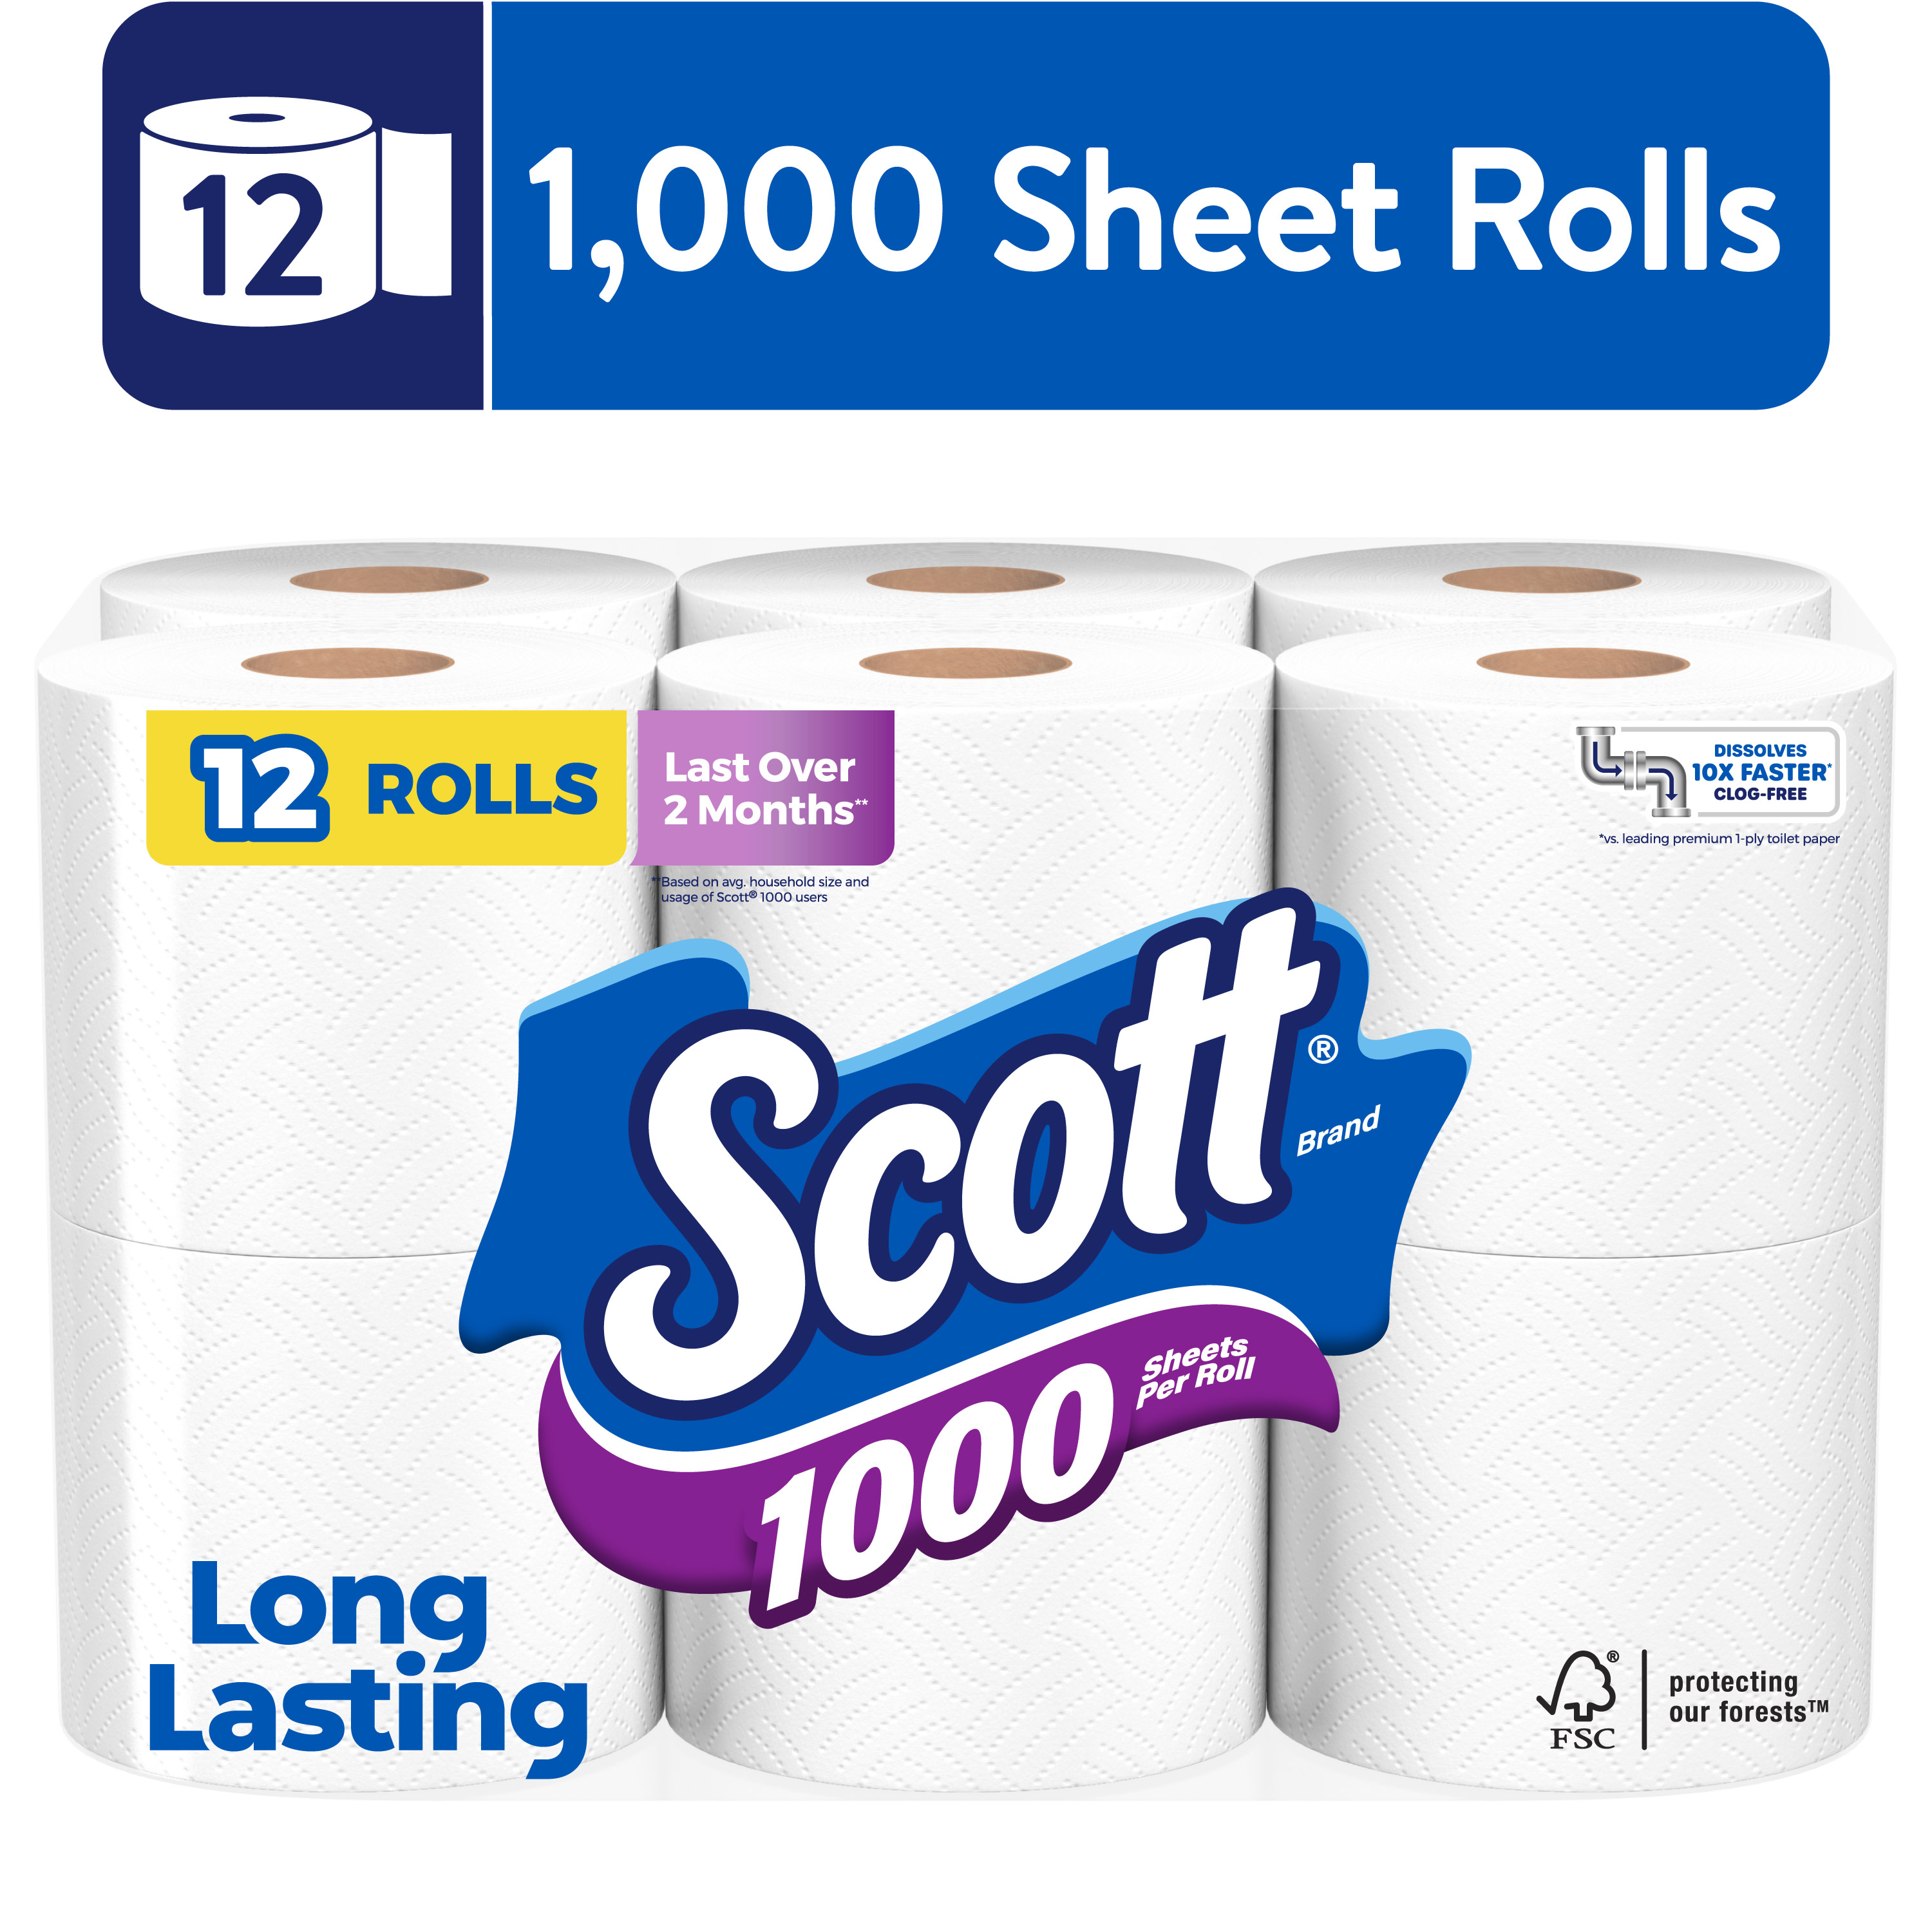 Scott 1000 Toilet Paper, 12 Rolls, 1,000 Sheets per Roll - image 1 of 11